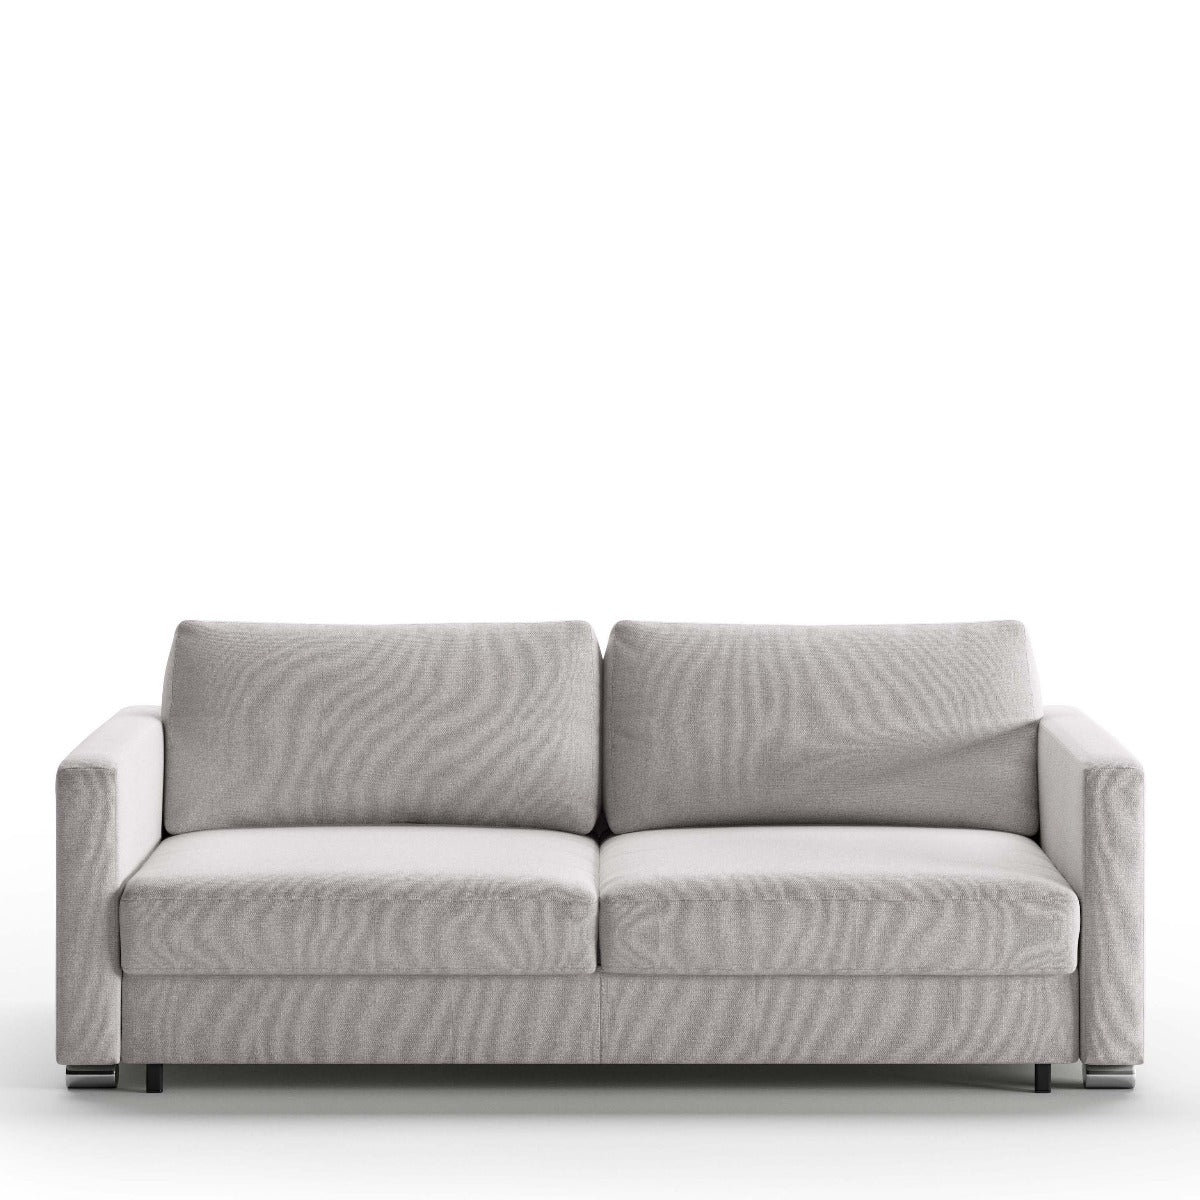 Luonto Furniture Fantasy King Sofa Sleeper - Rene 01 - 217/6 Chrome